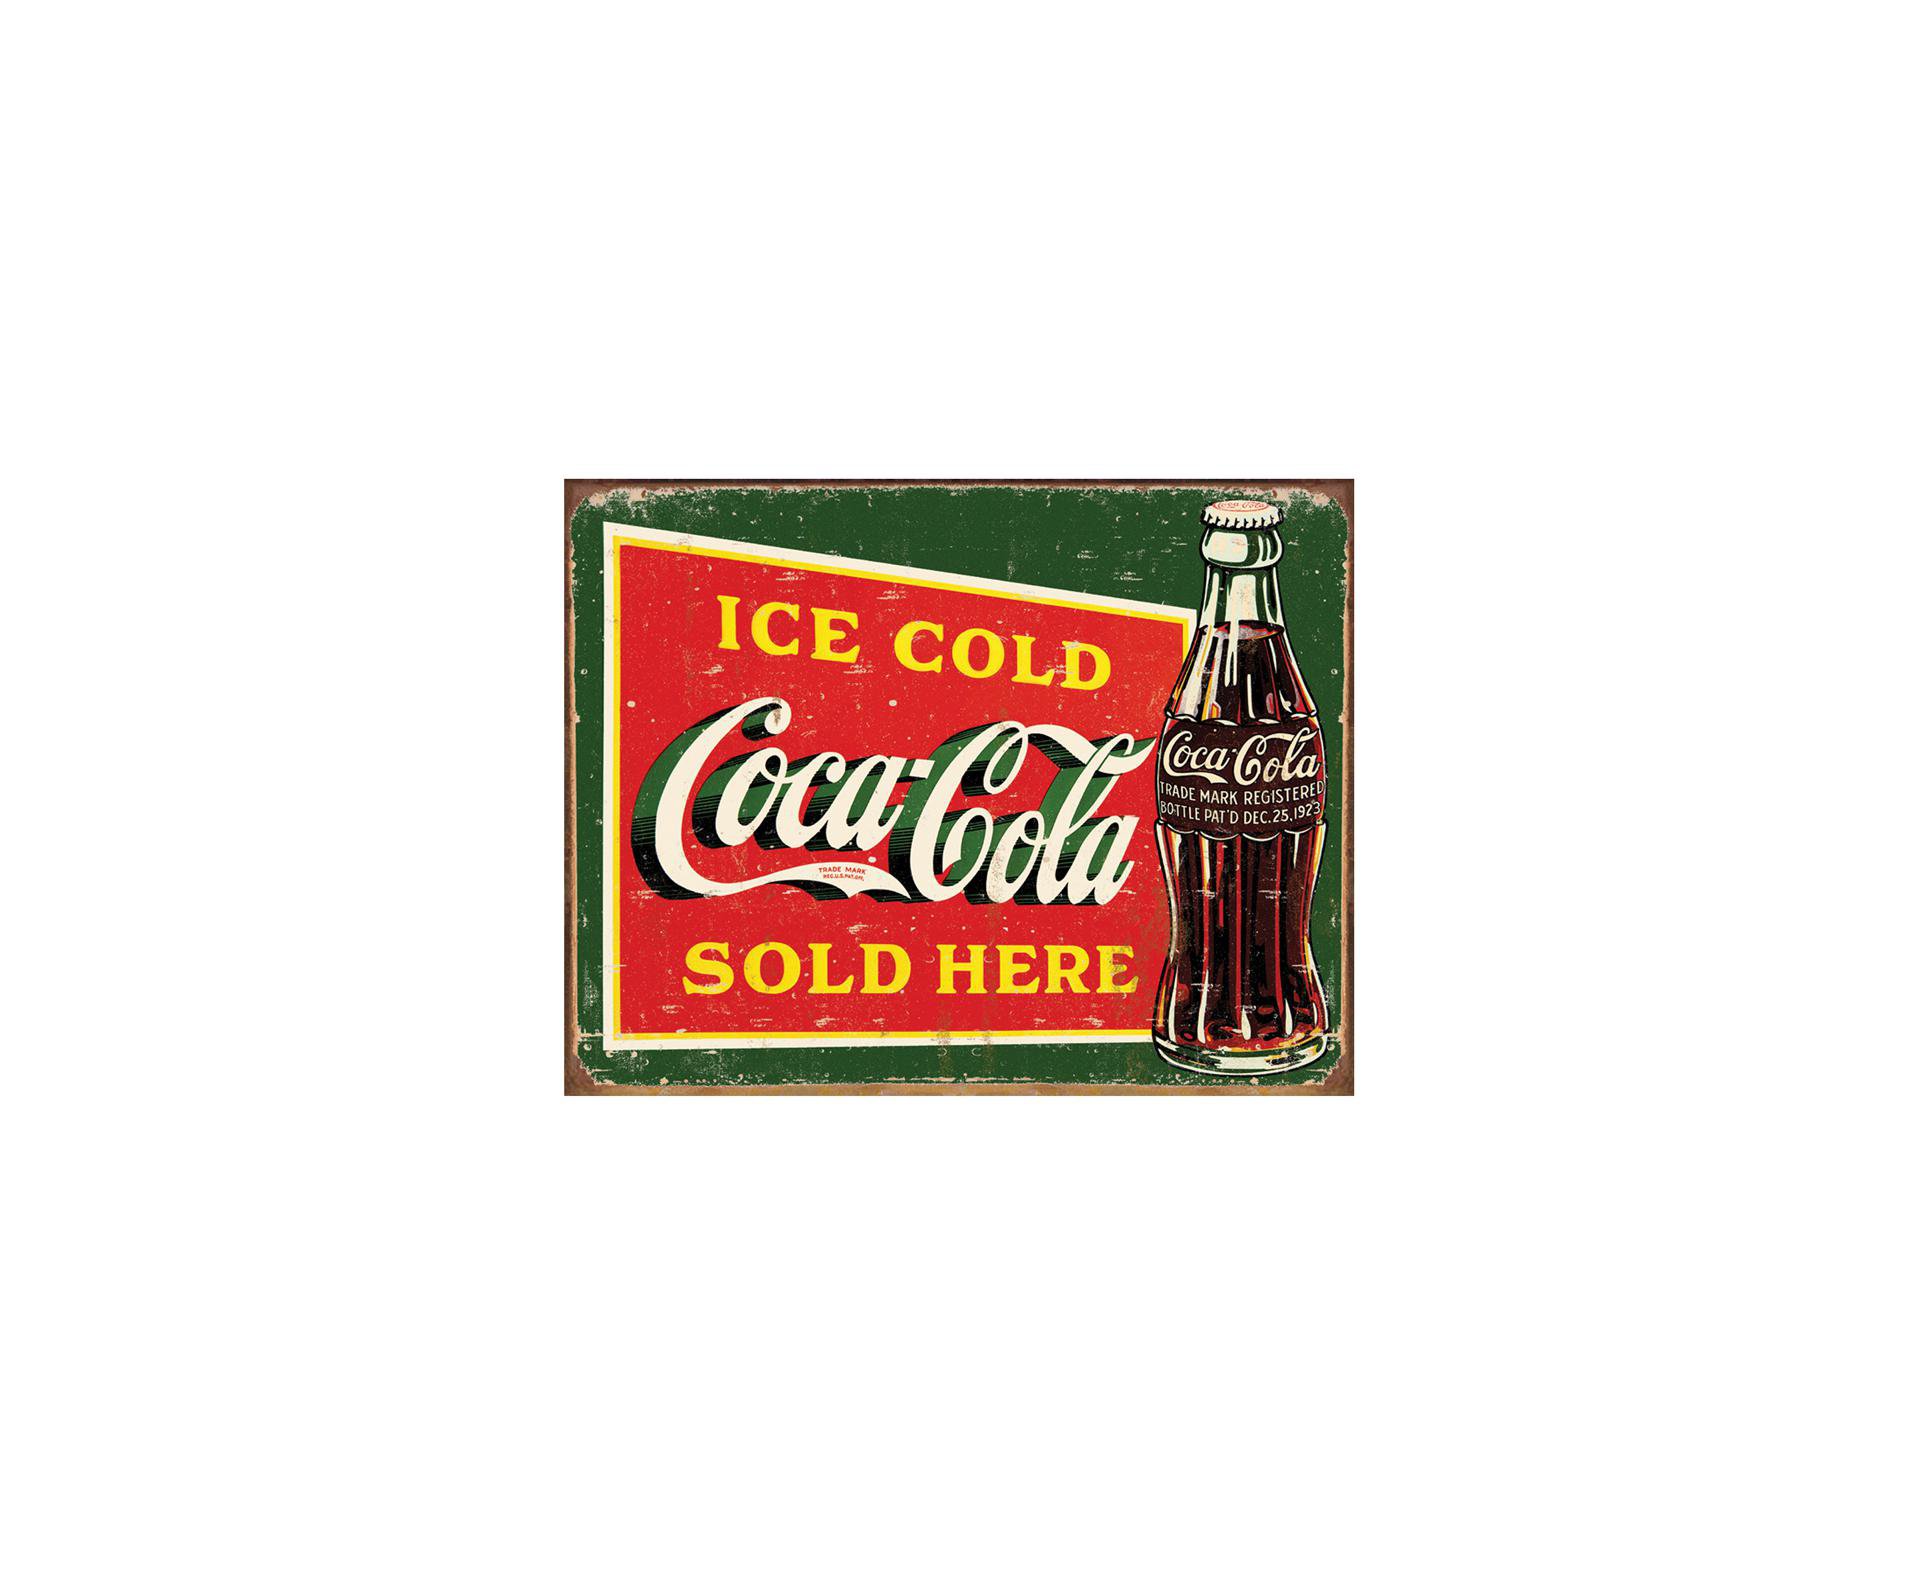 Placa Metálica Decorativa Ice Cold Coke 1 - Rossi